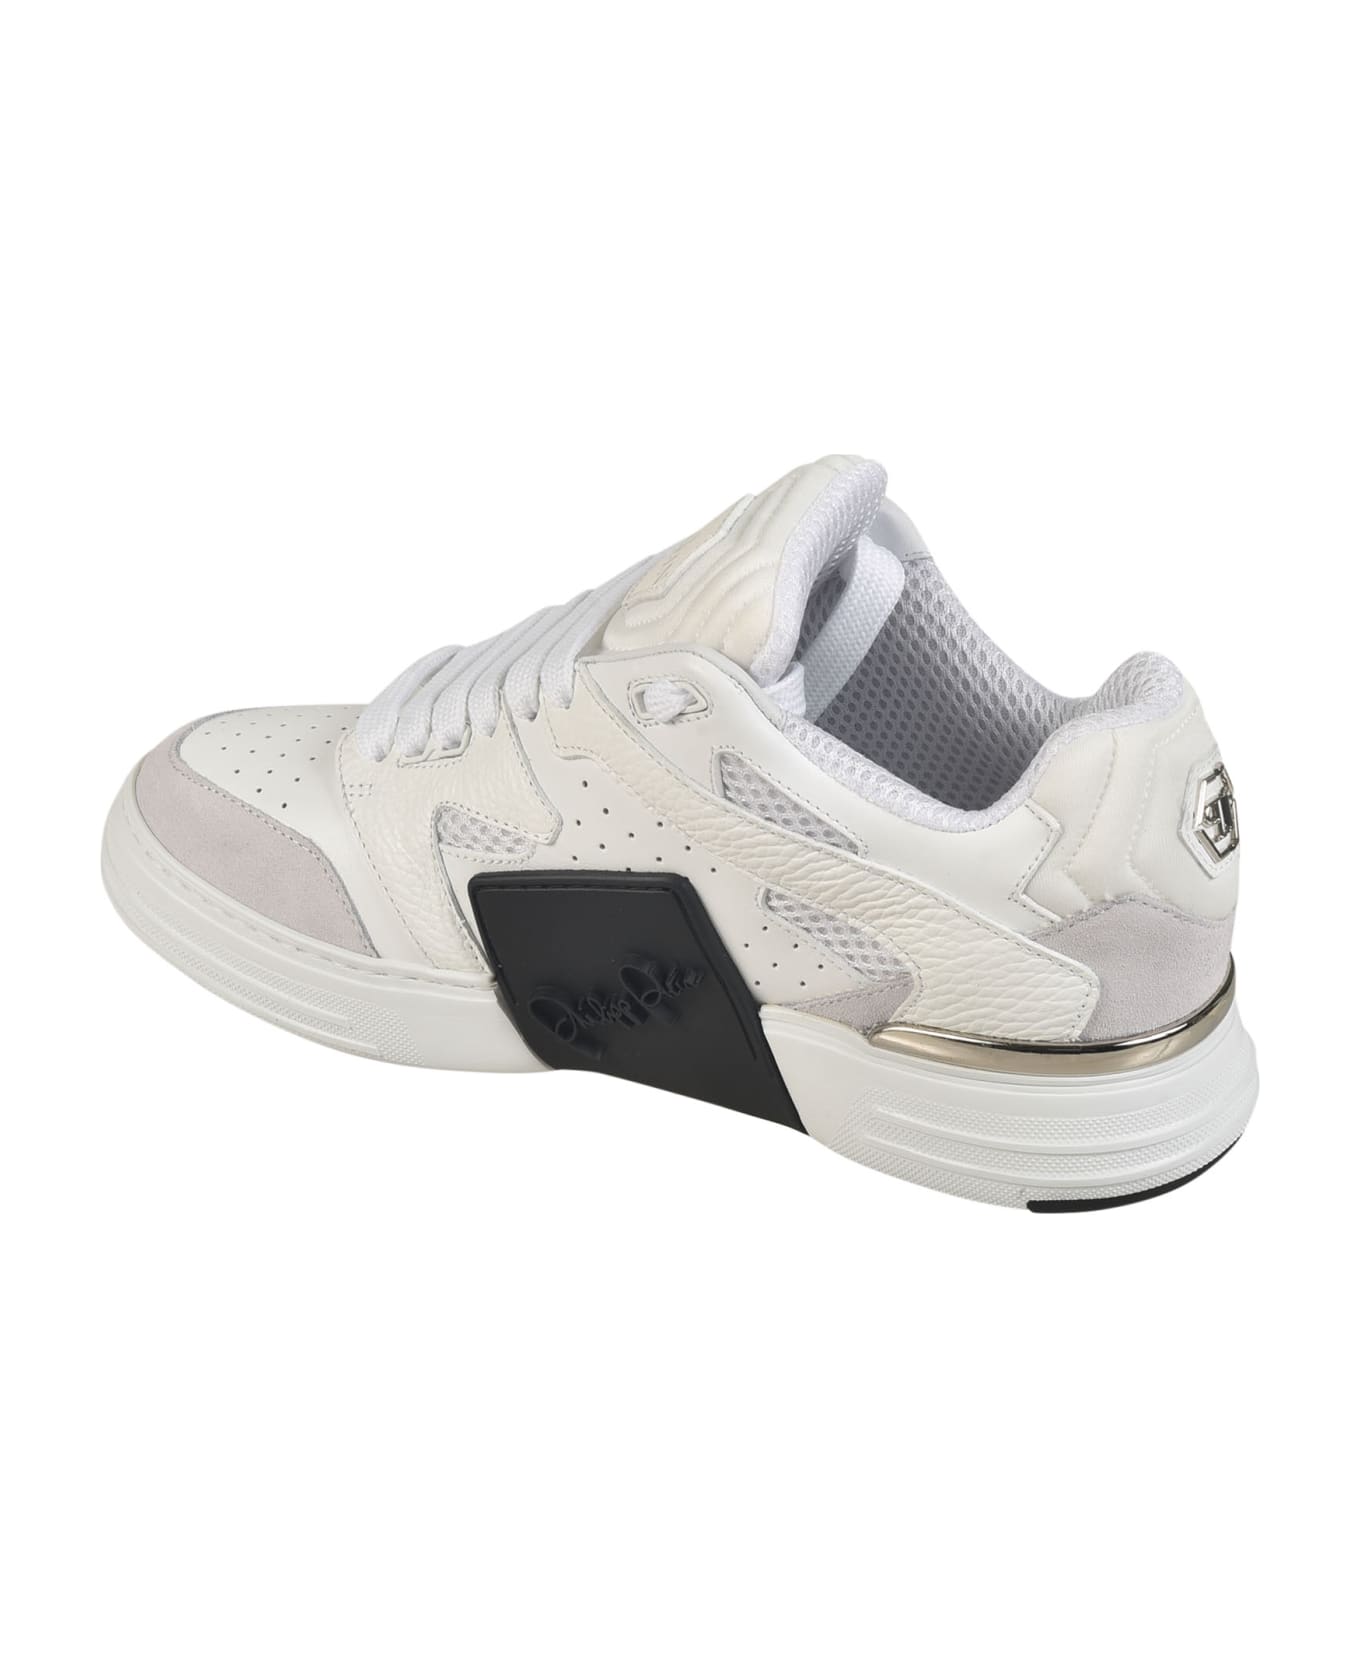 Philipp Plein Mix Leather Sneakers - White スニーカー